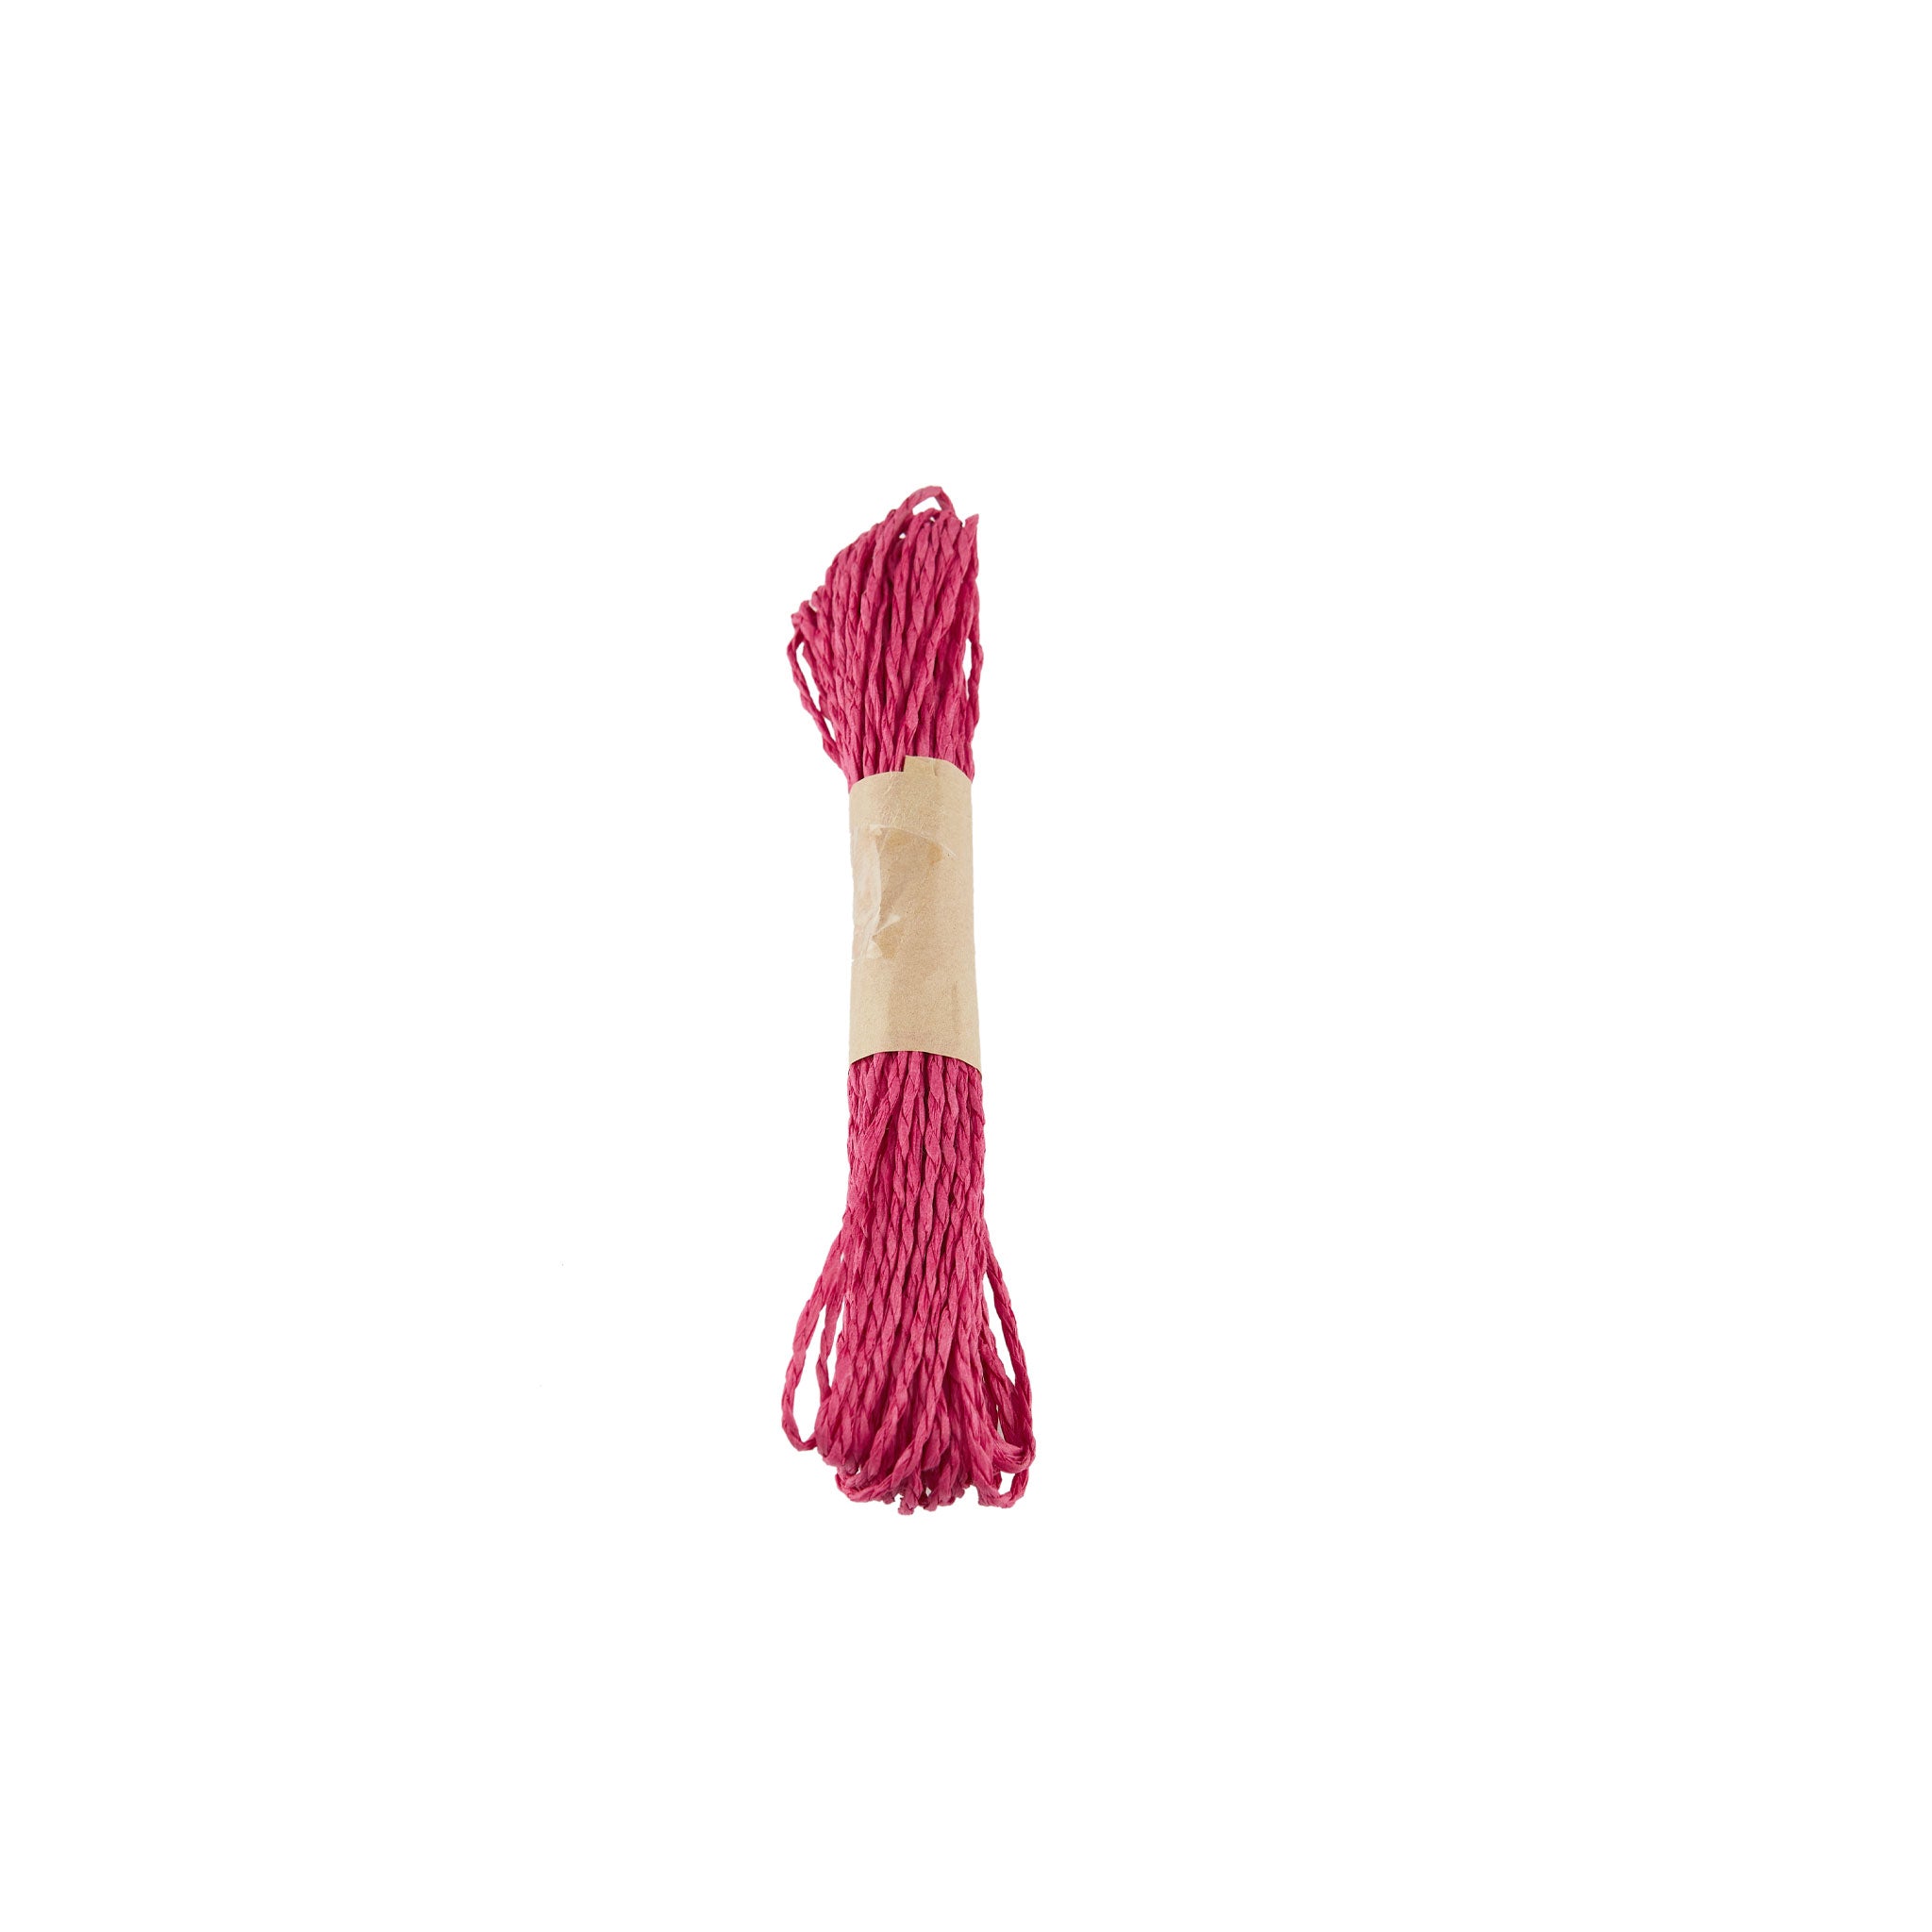 Paper Rope Mixed Colors (10 Meters * 12 Rolls) - Hotpack Global